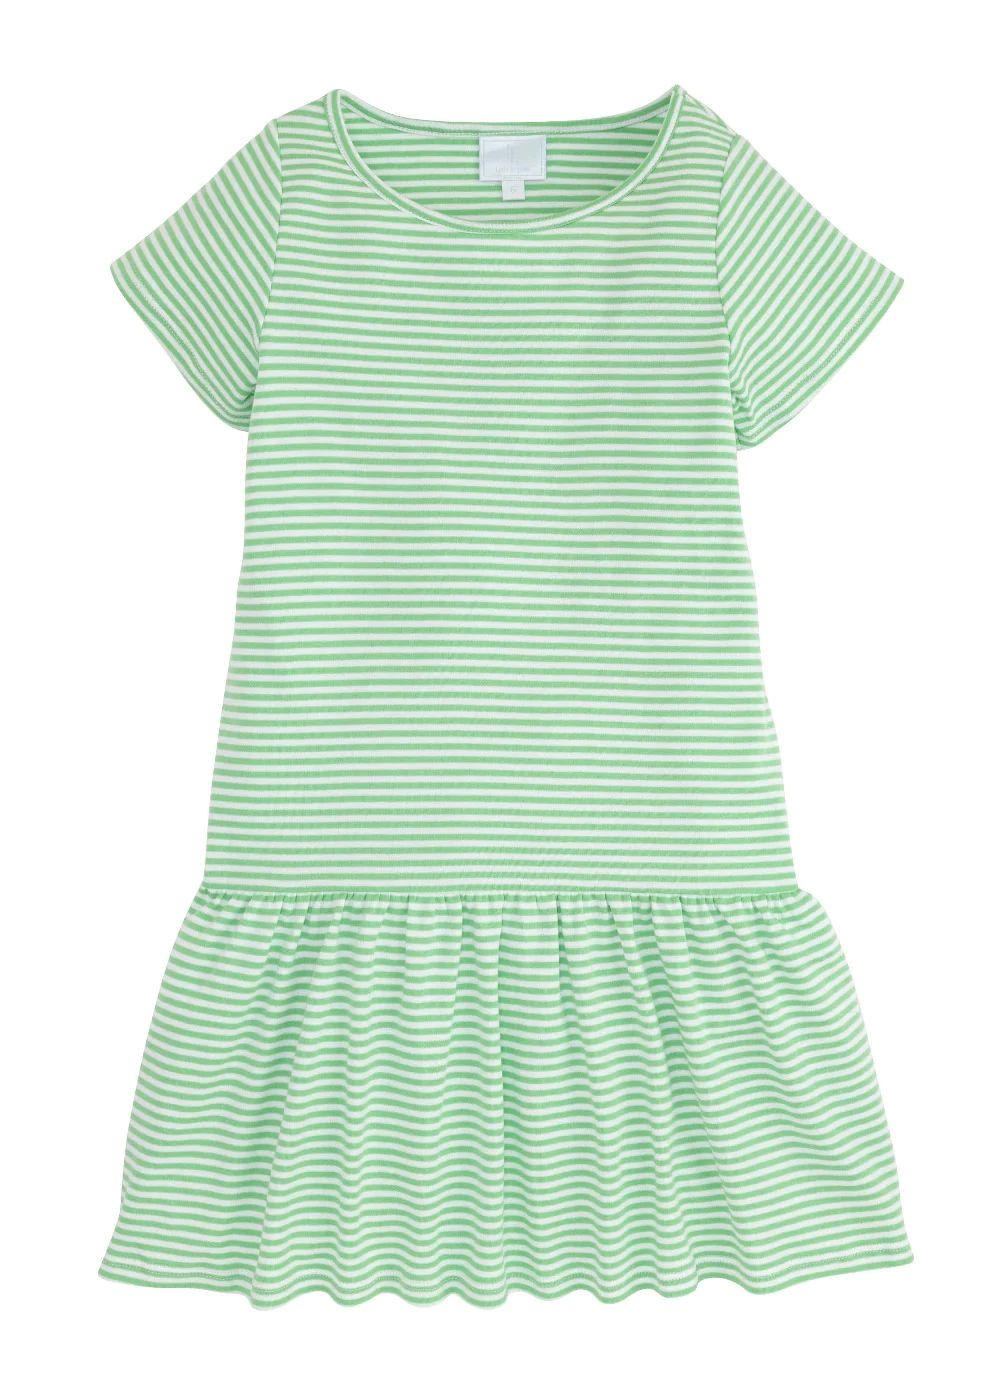 Chanel T-Shirt Dress - Green Stripe | Little English